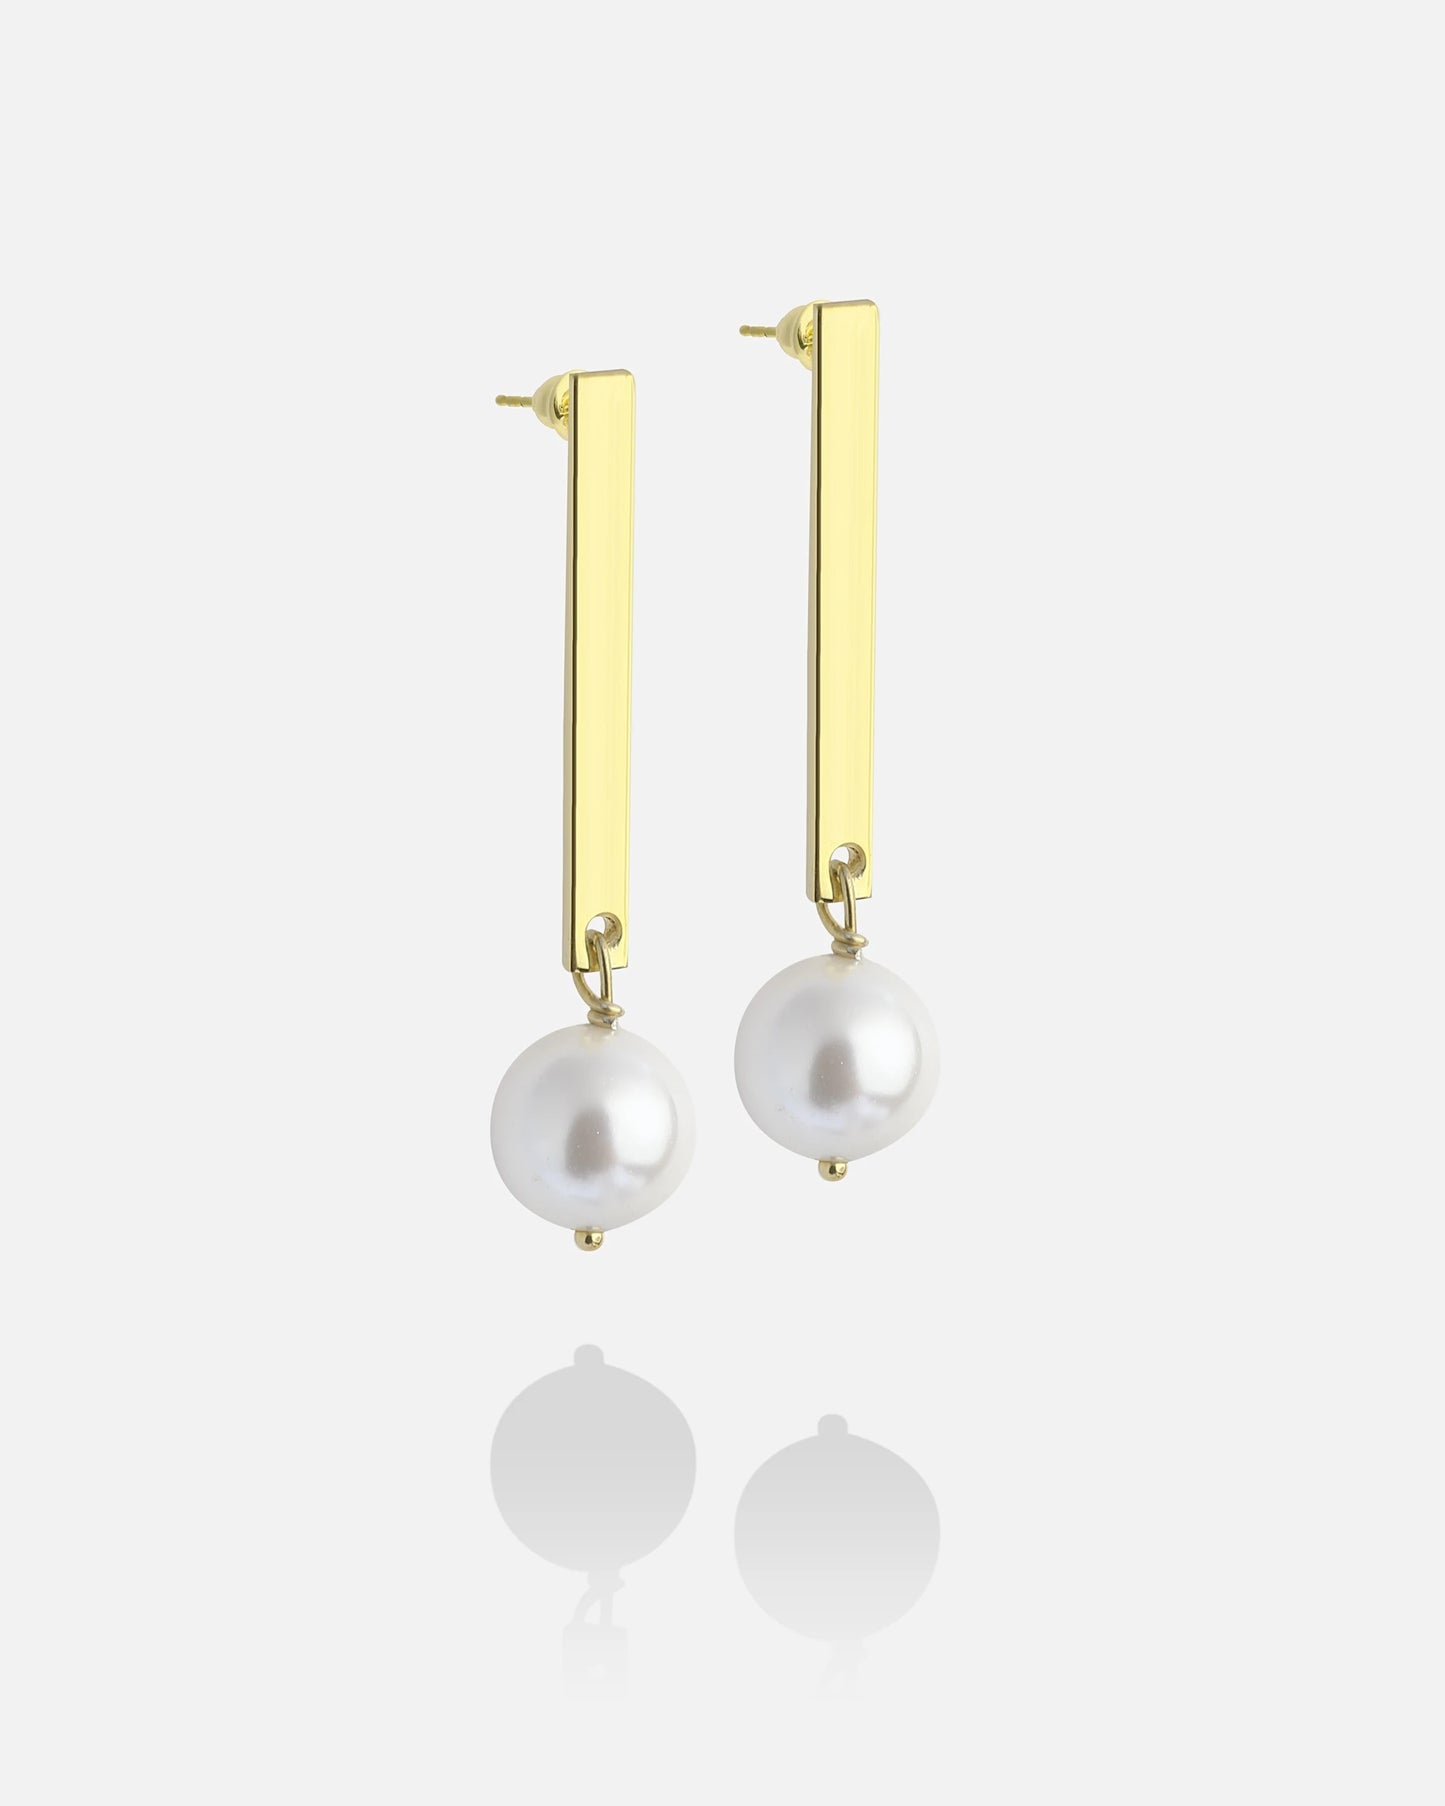 Modern Silver Design Pearl Drop Earrings Gold Filled